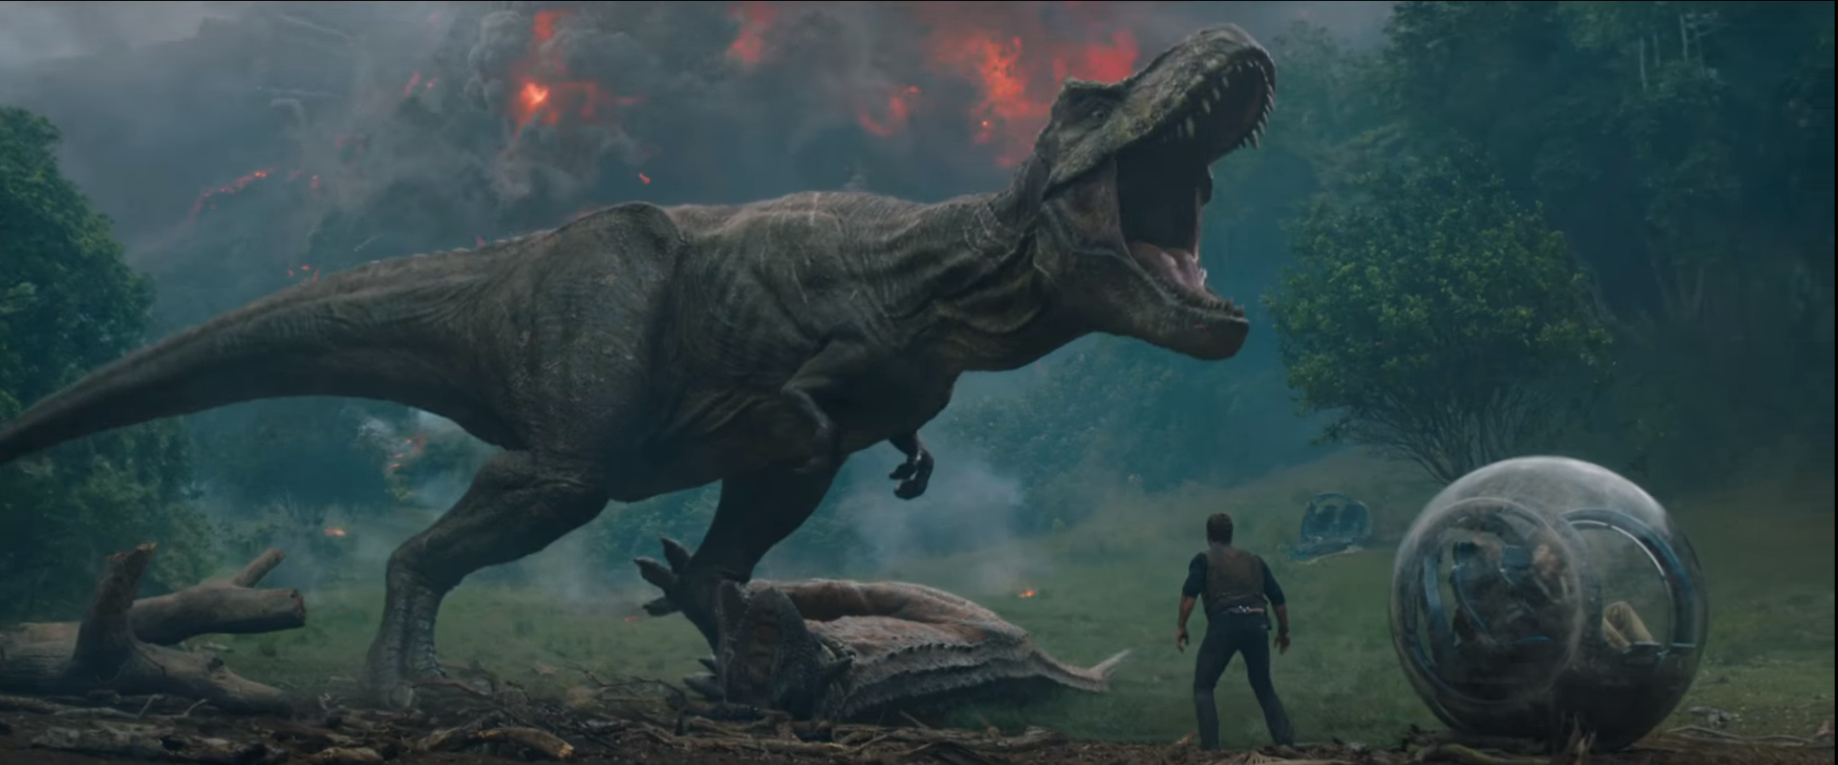 Internet Reacts to New 'Jurassic World 2